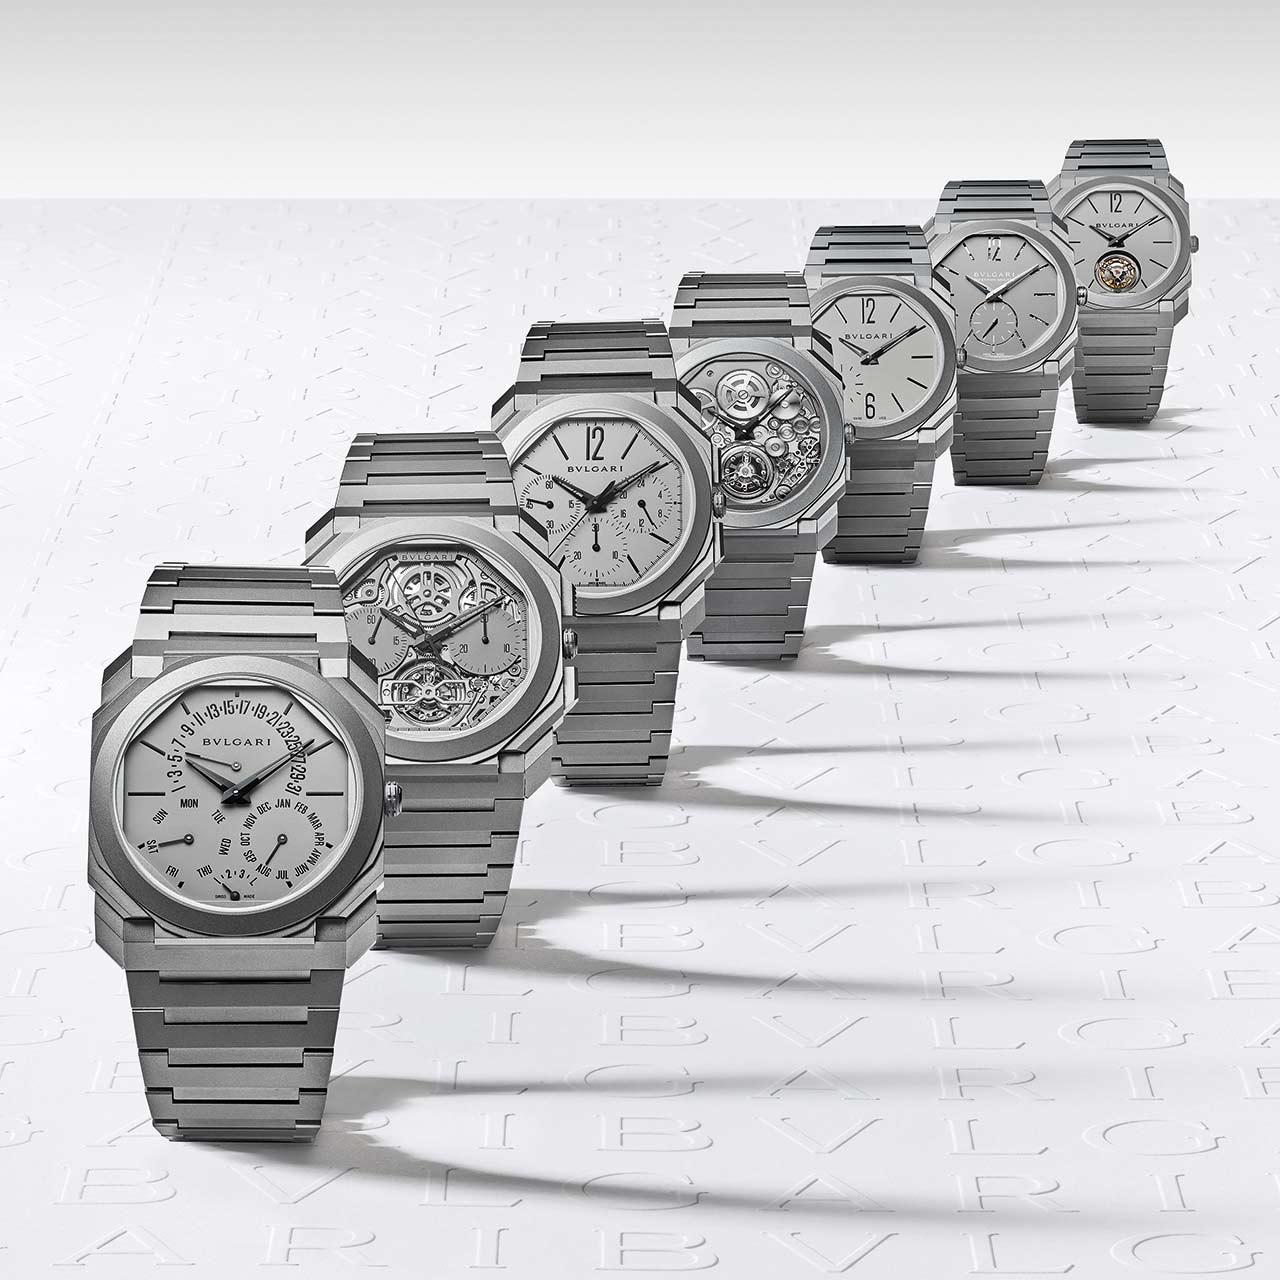 Introducing The Bulgari Octo Finissimo Ultra Watch